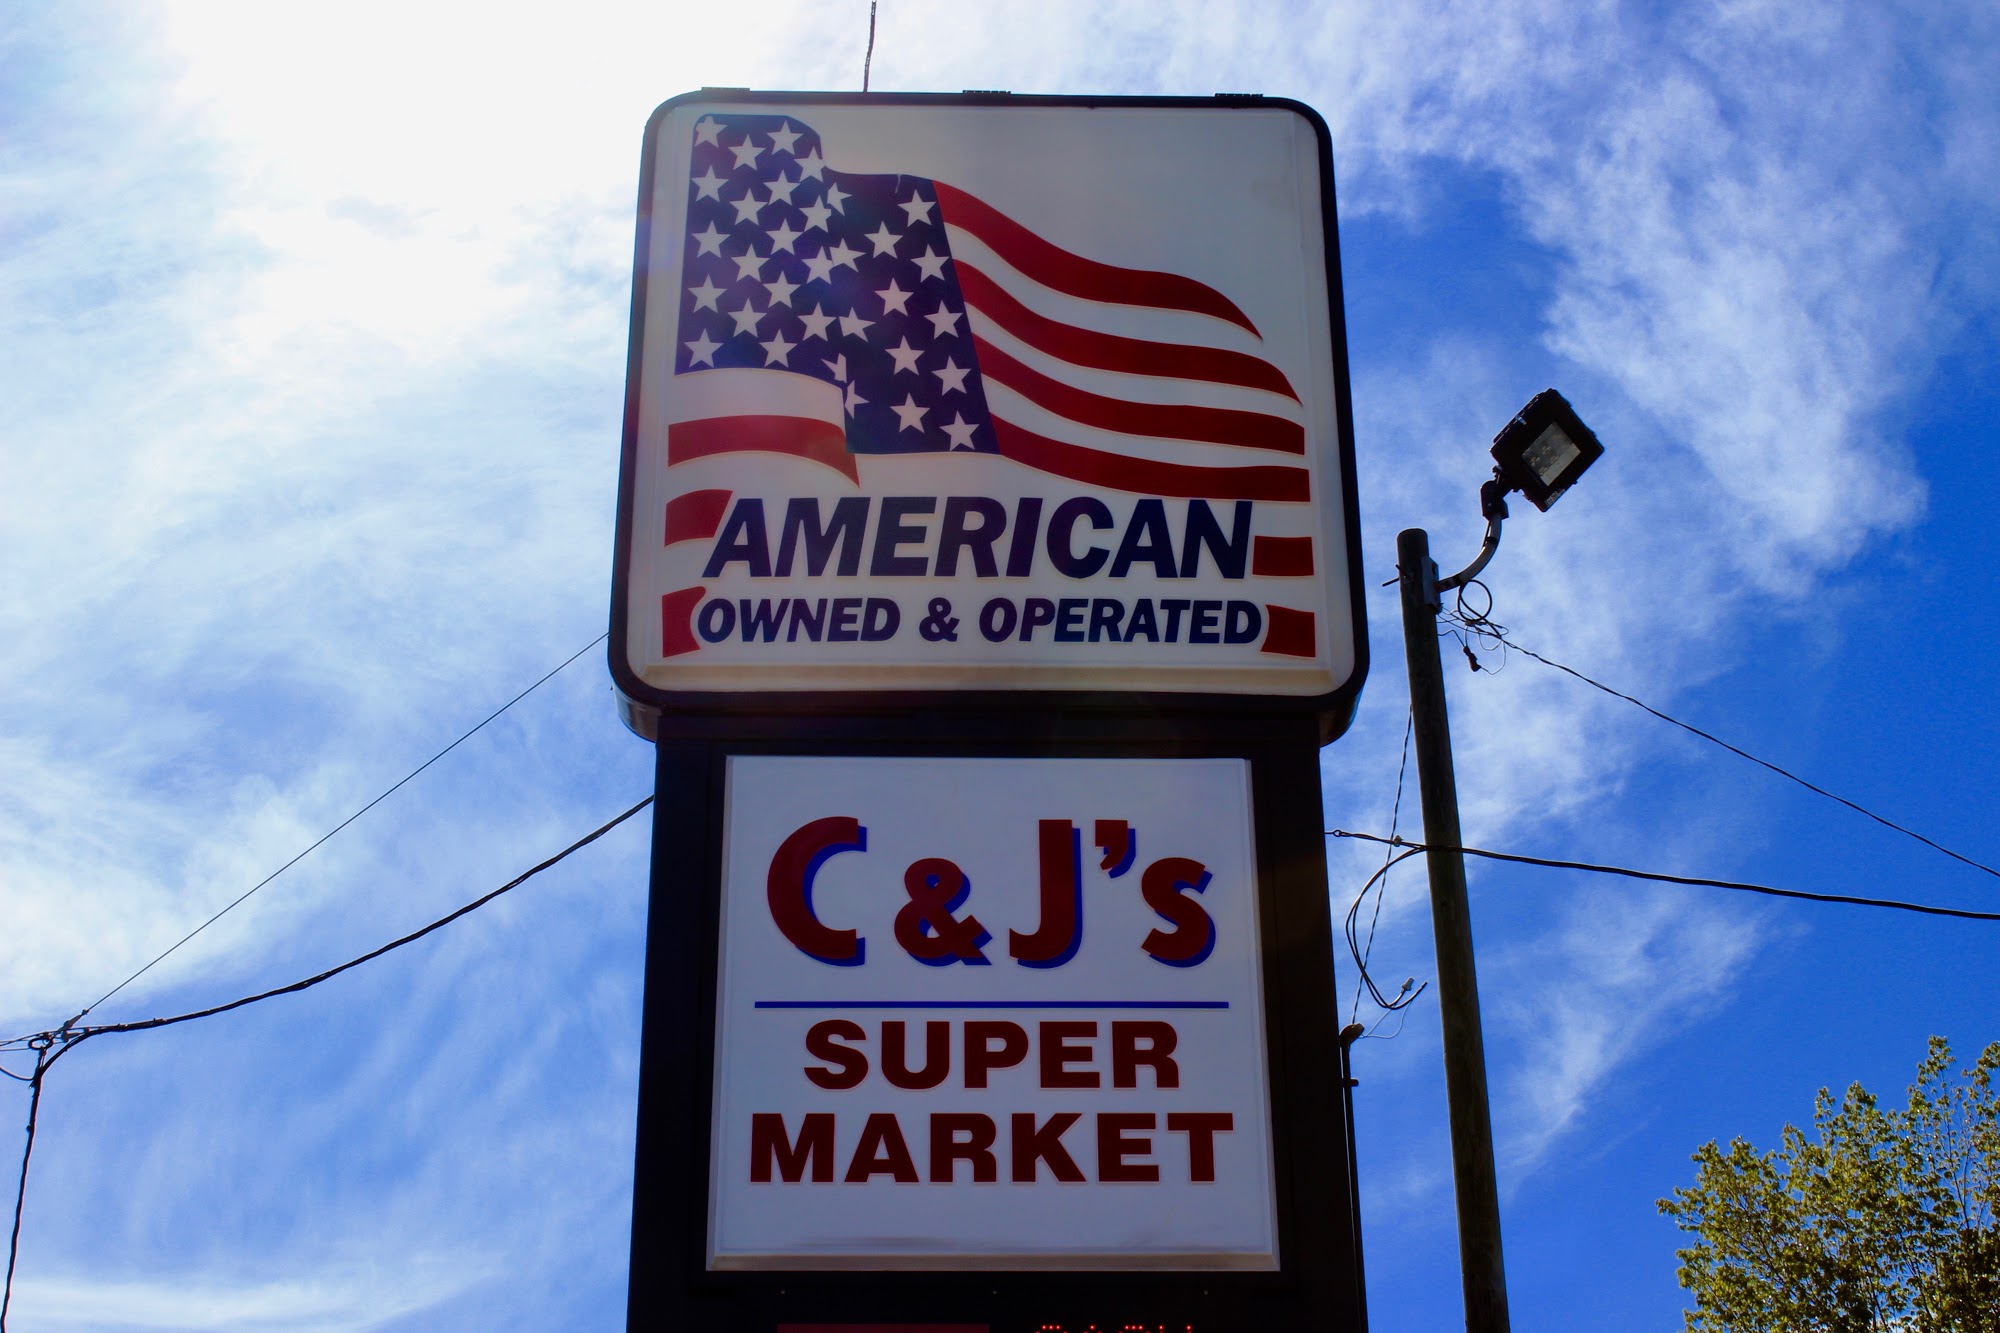 C&J's Supermarket